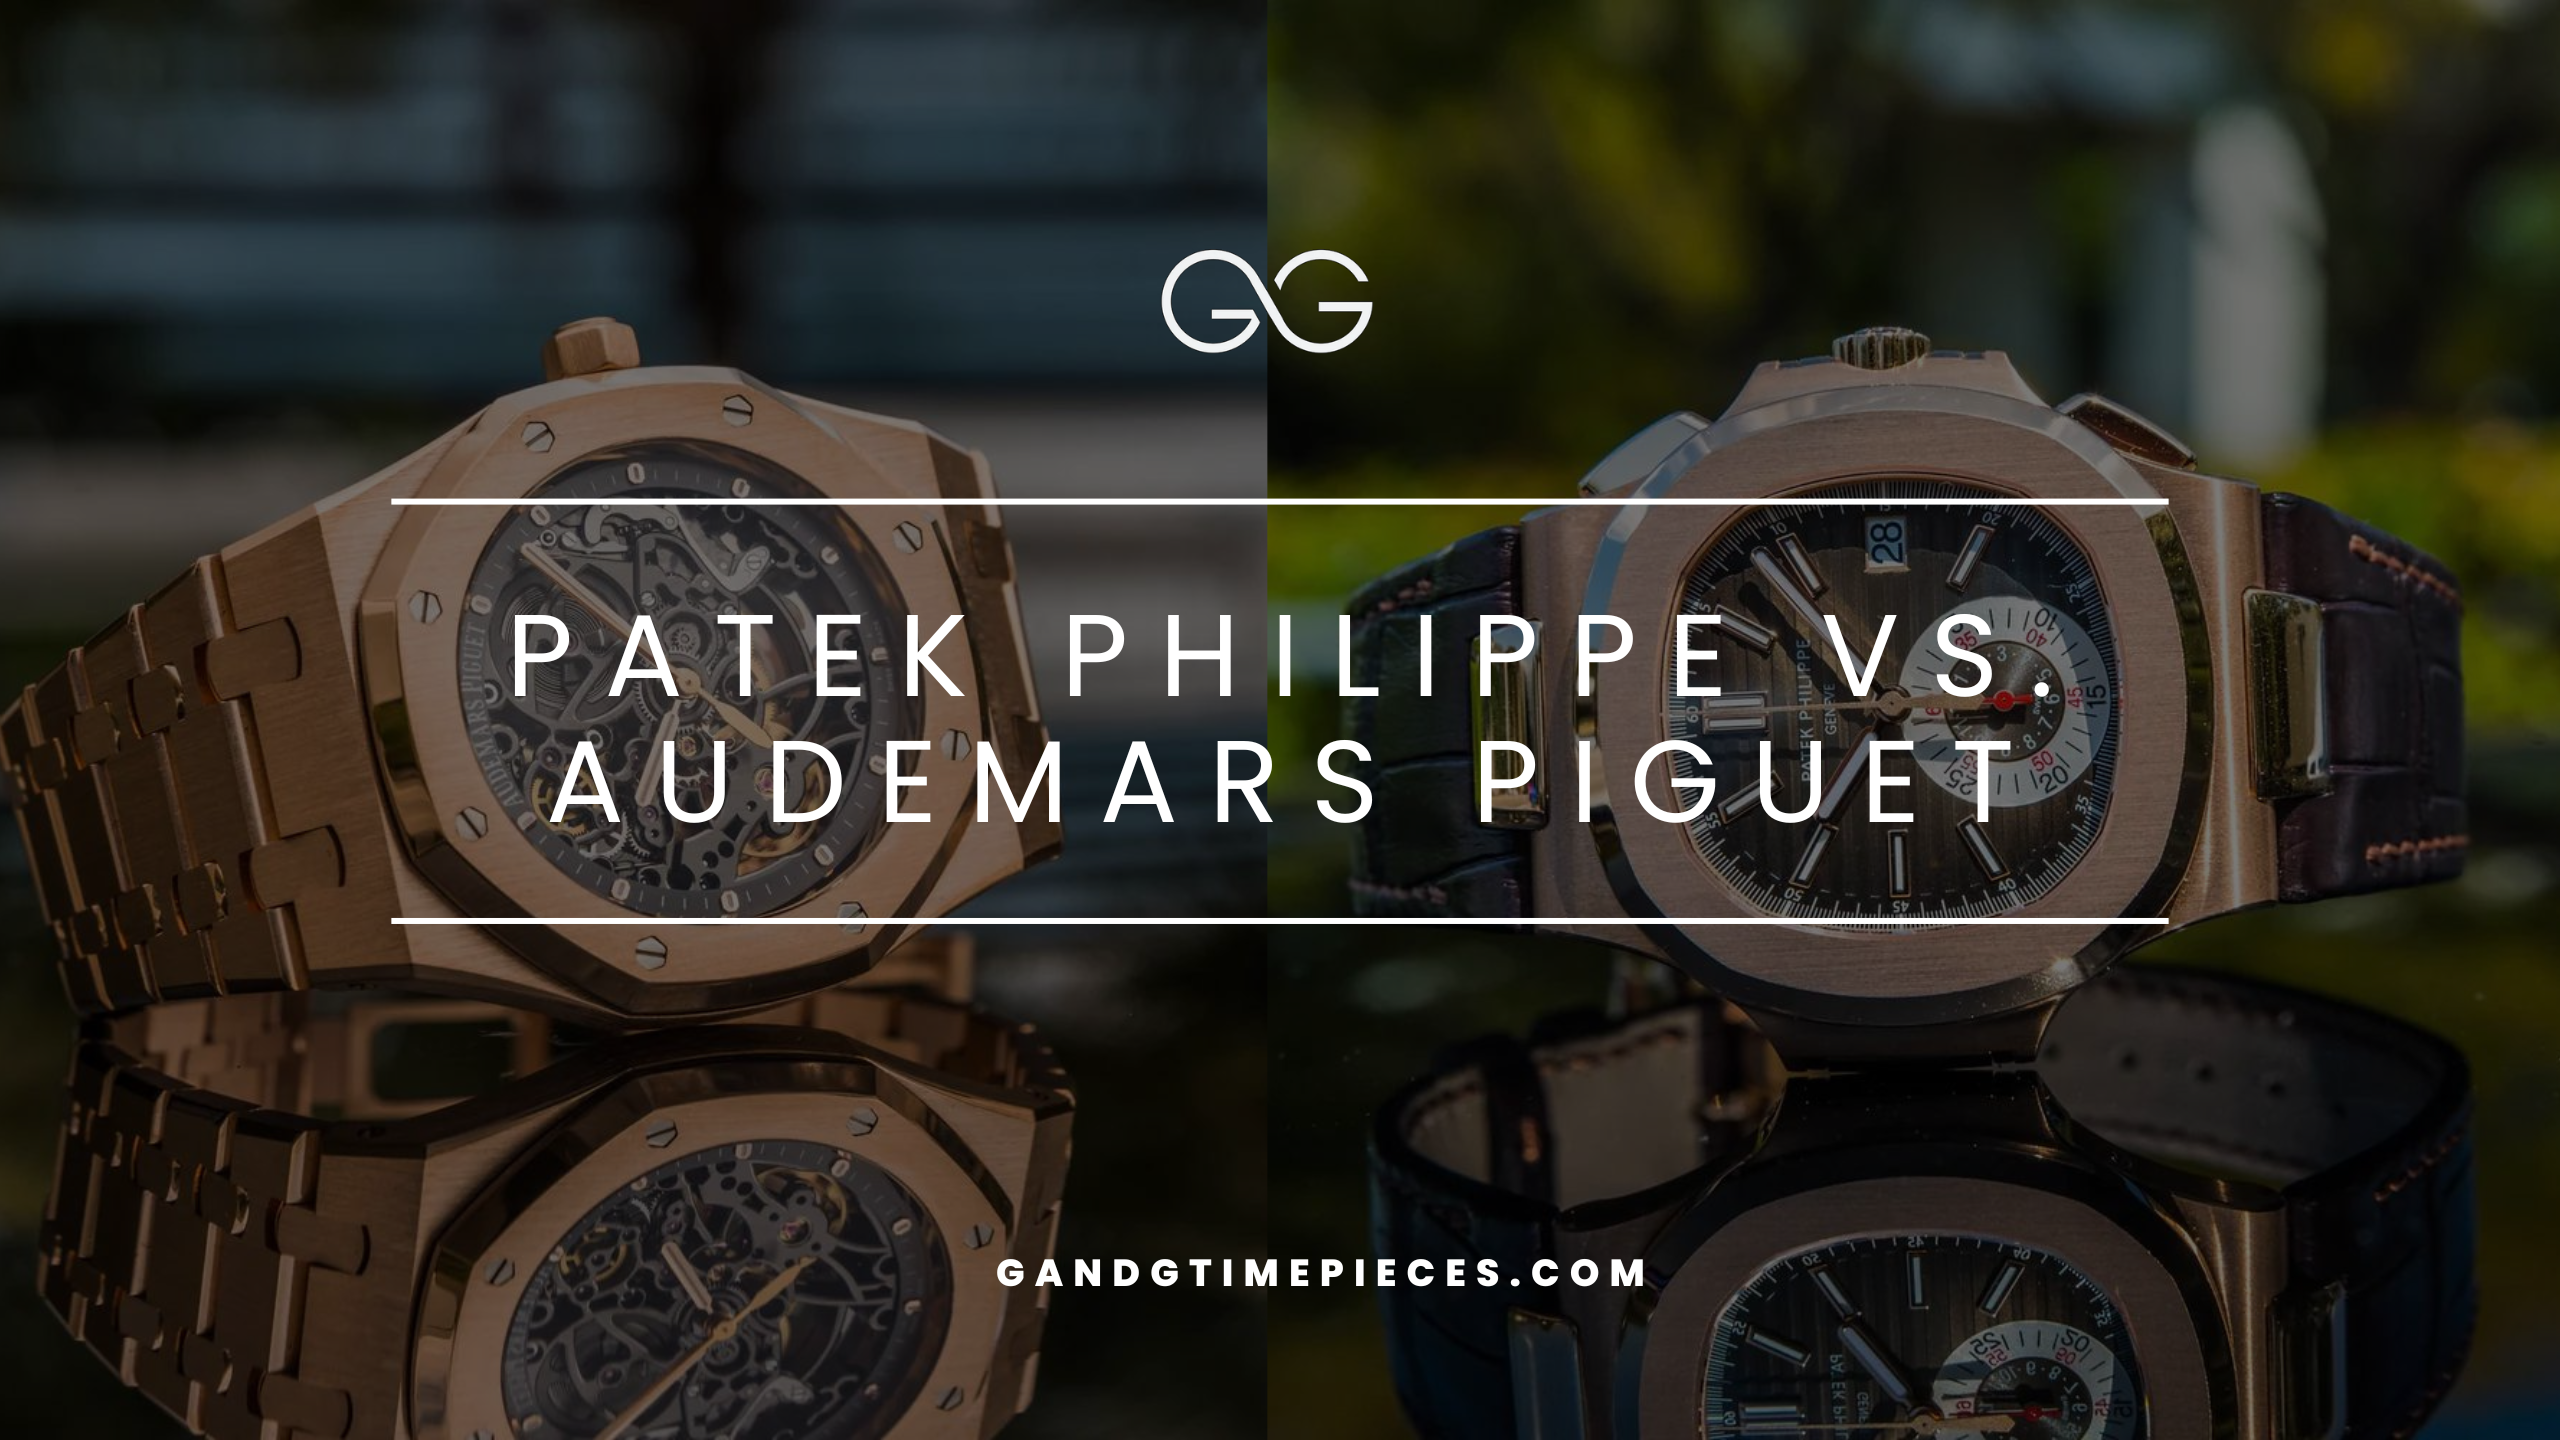 Patek Philippe vs. Audemars Piguet